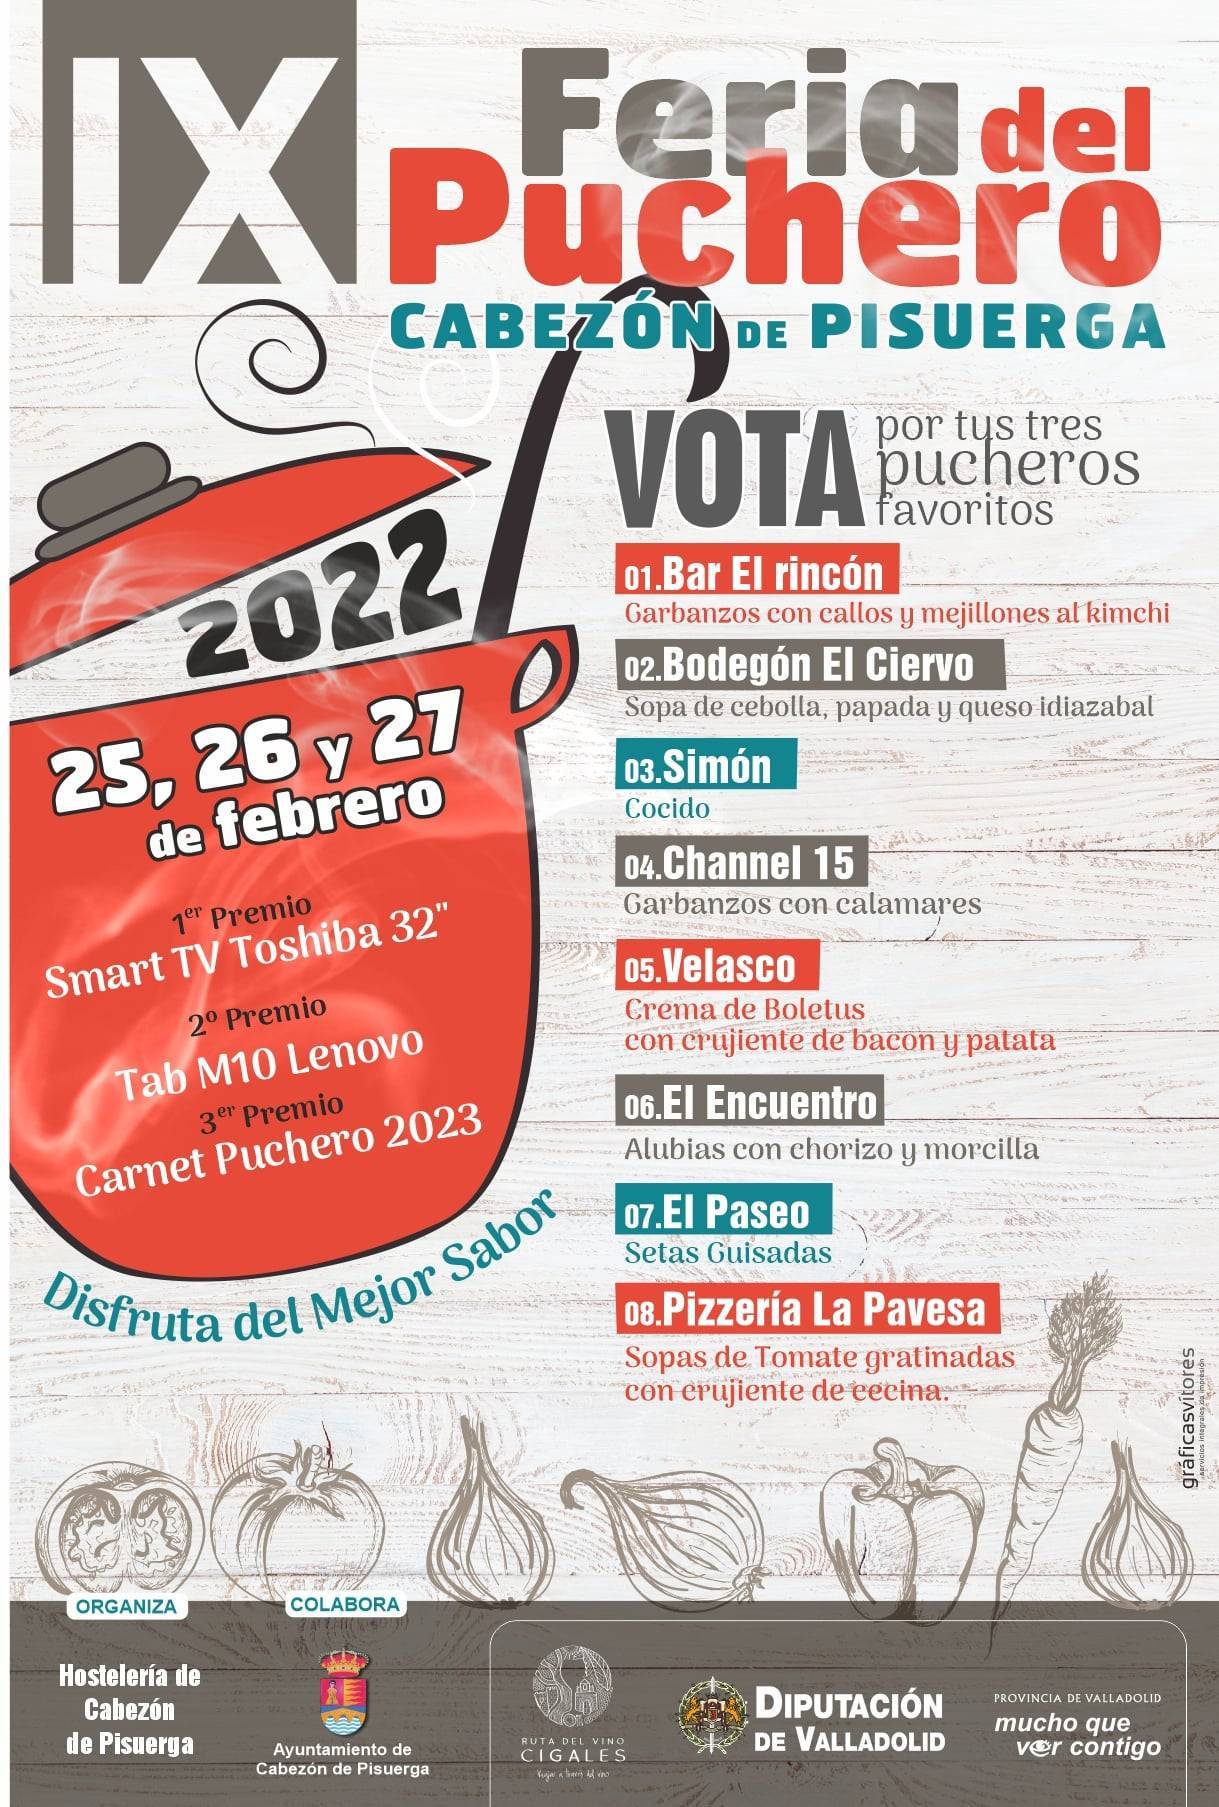 IX Feria del Puchero - Cabezón de Pisuerga (Valladolid)